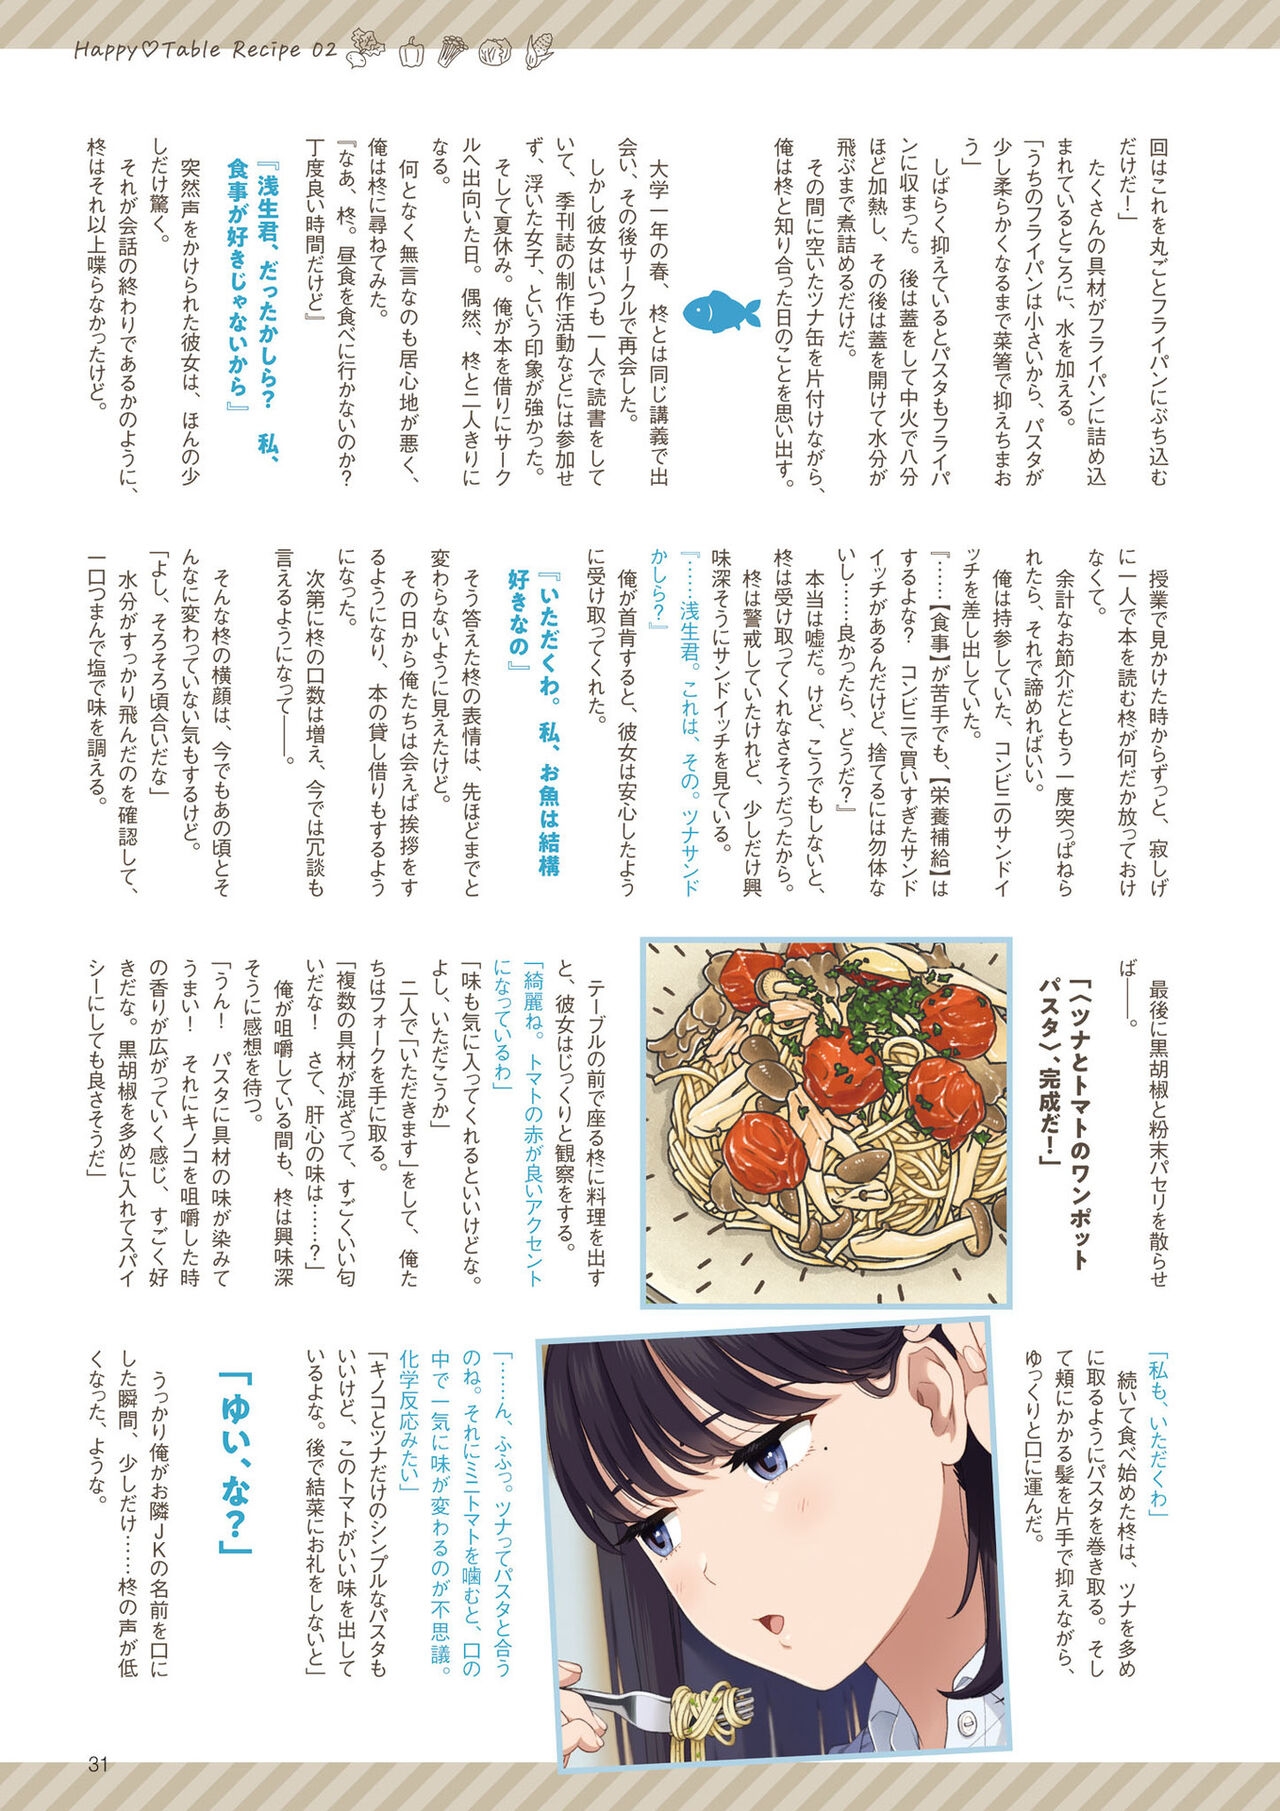 Dengeki G's Magazine #297 - April 2022 28